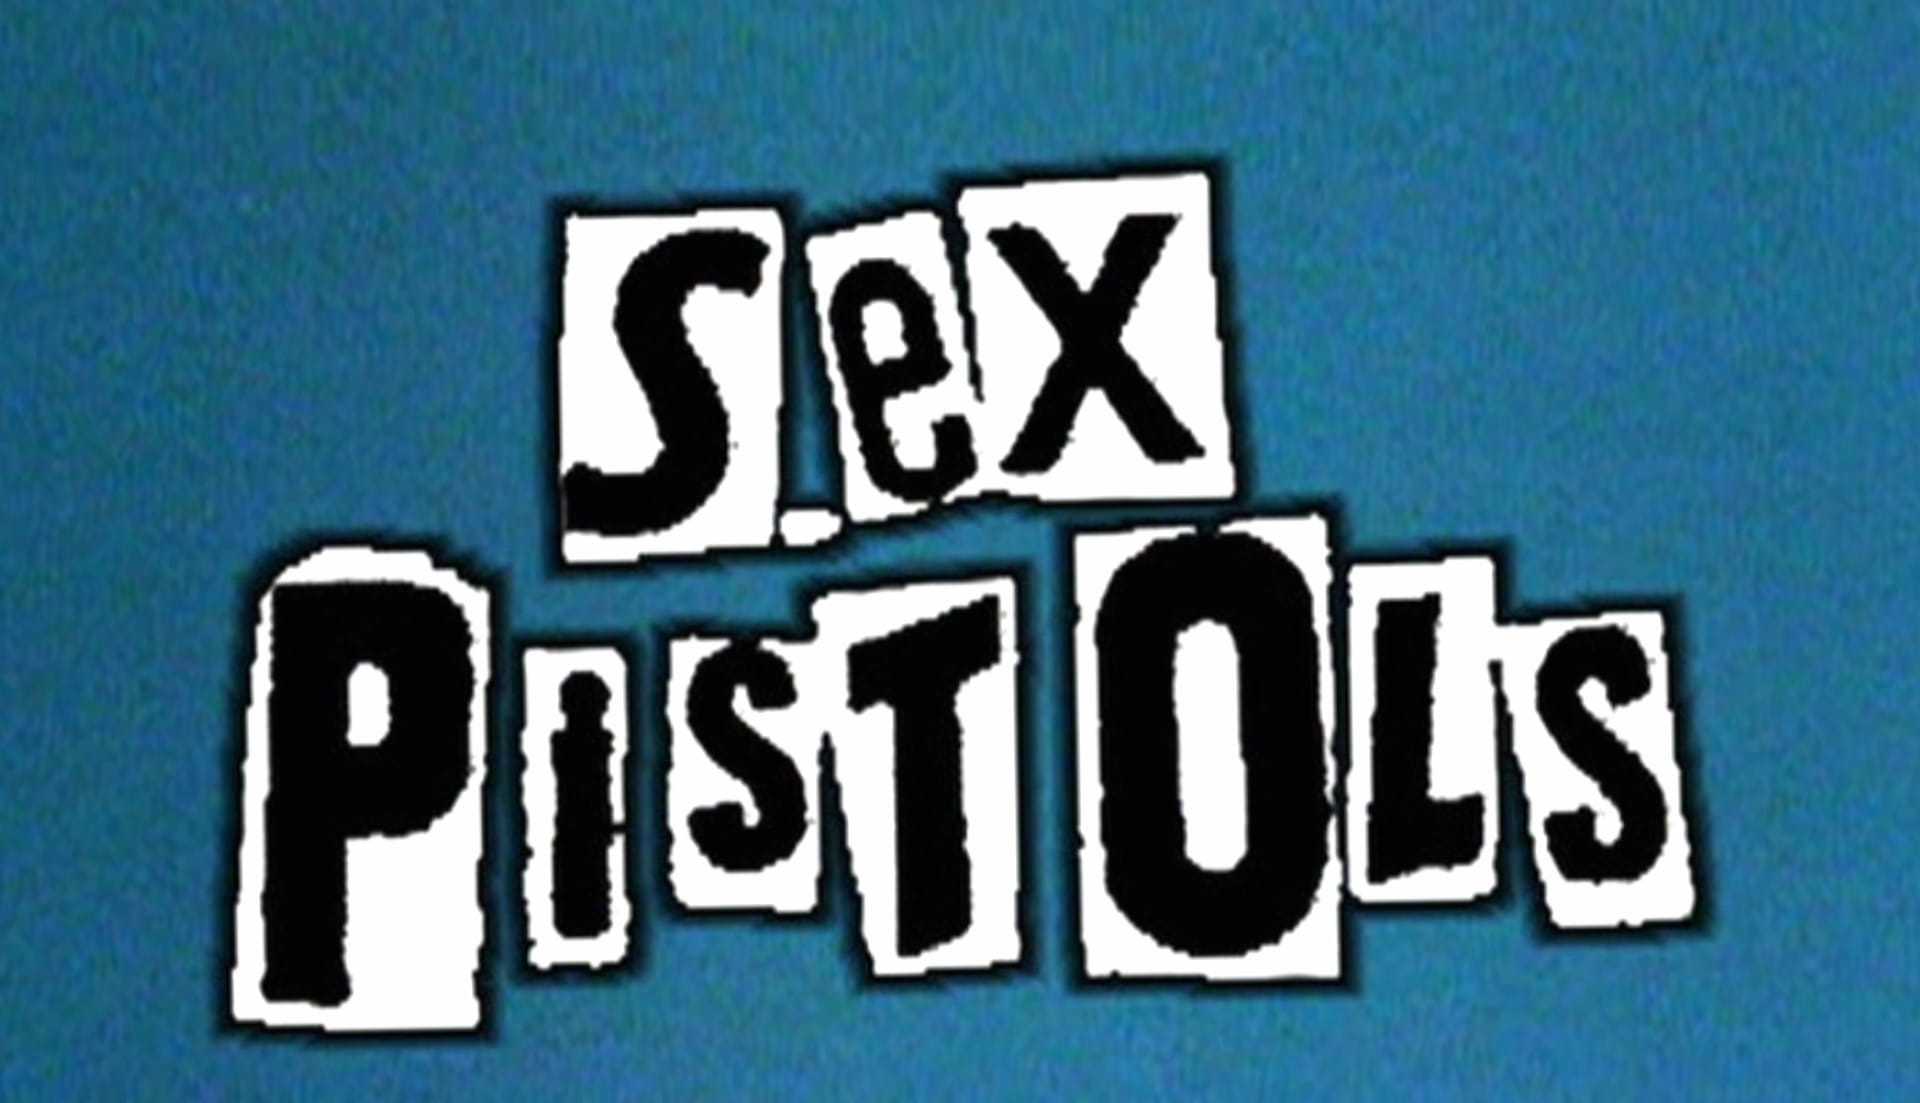 Sex Pistols at 1024 x 1024 iPad size wallpapers HD quality